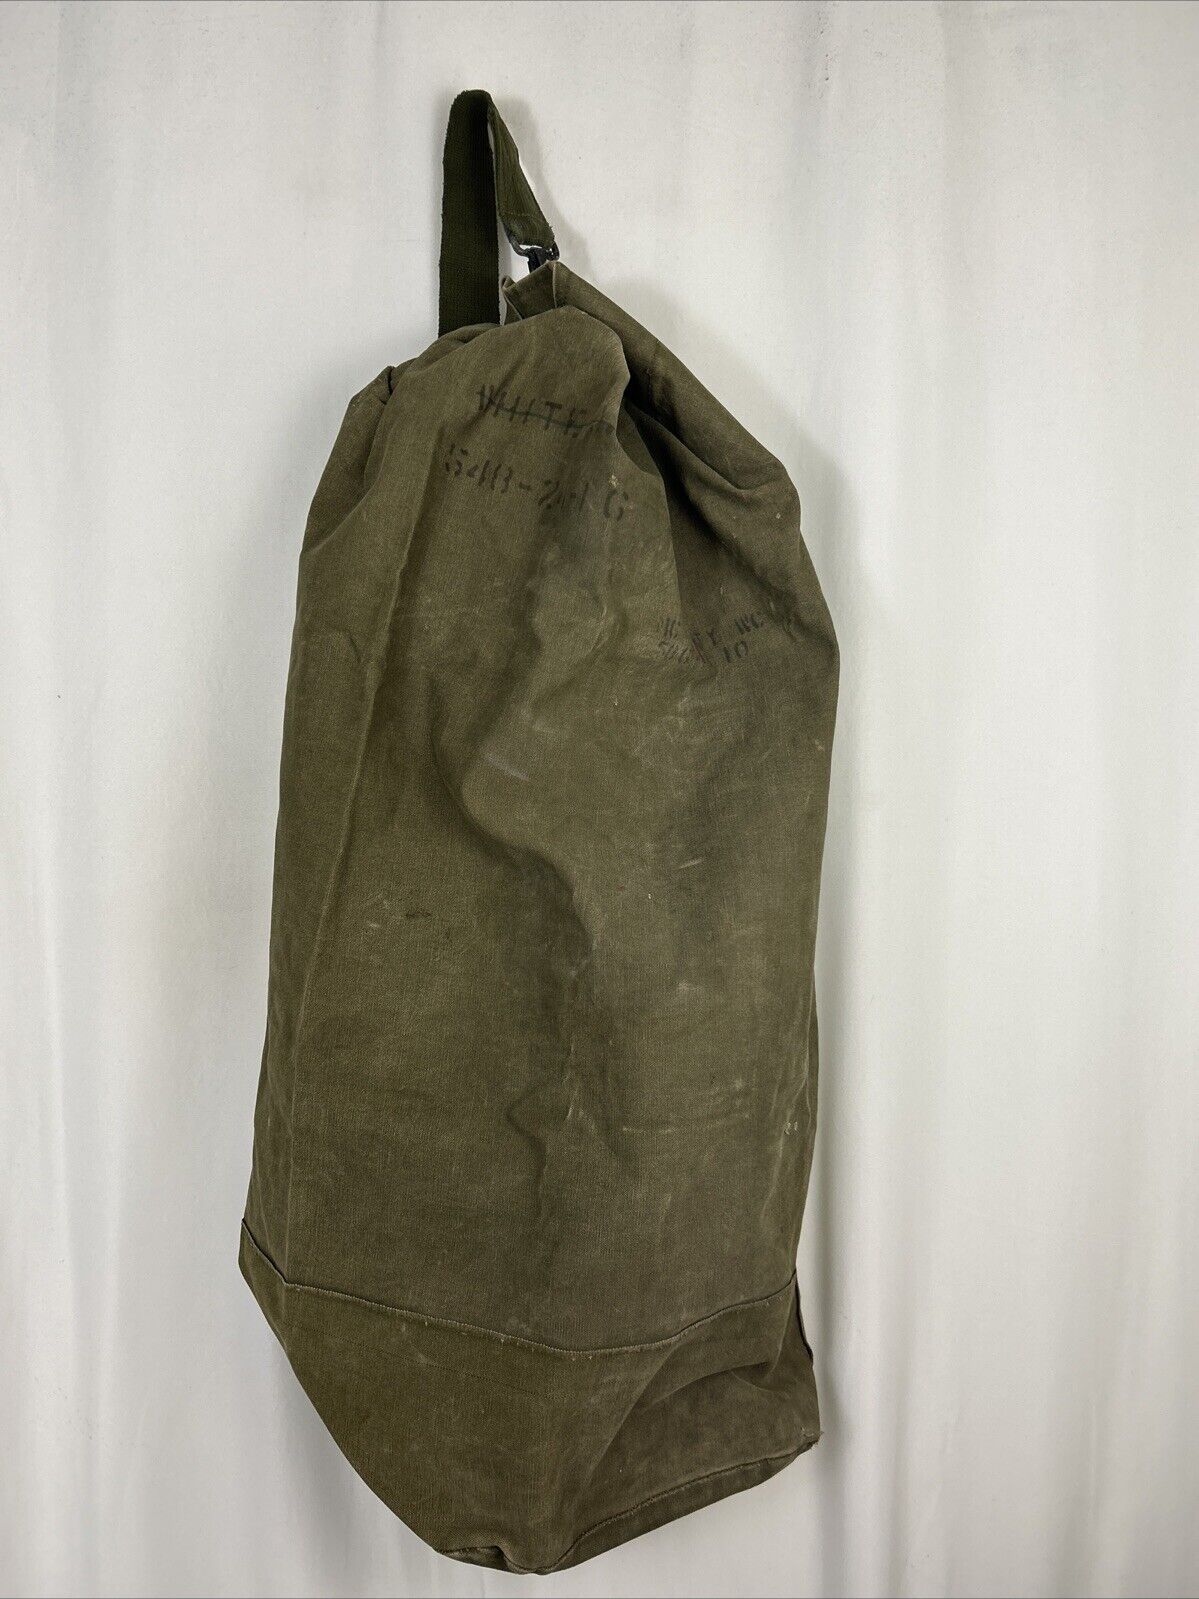 1957 US Army Large Duffle Bag Cotton Duck by Sanitary Sleep Corp. 37x12x12